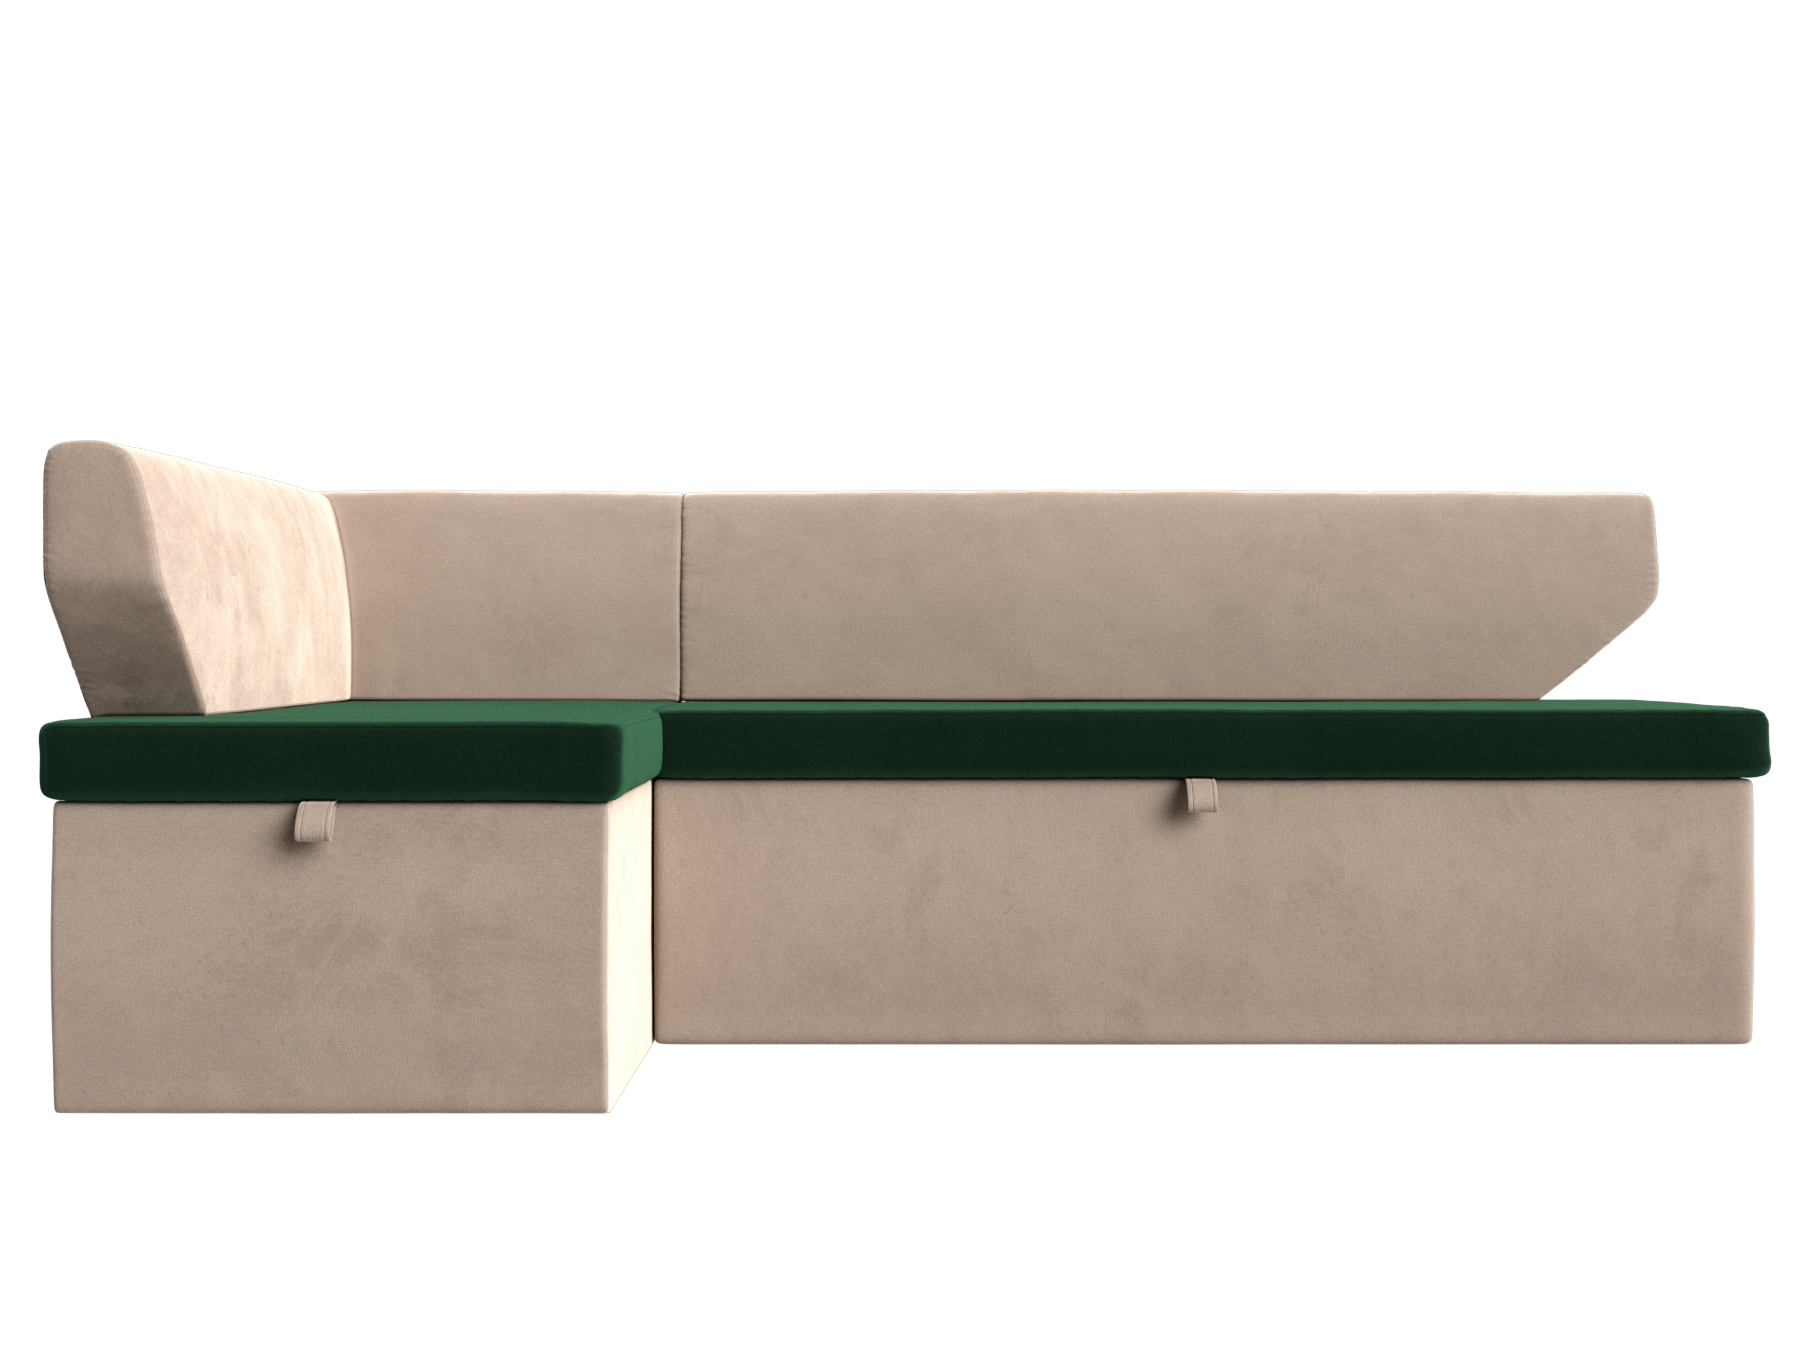 Кухонный угловой диван Омура Левый Зеленый, Бежевый, ЛДСП кухонный диван кровать токио зеленый бежевый велюр